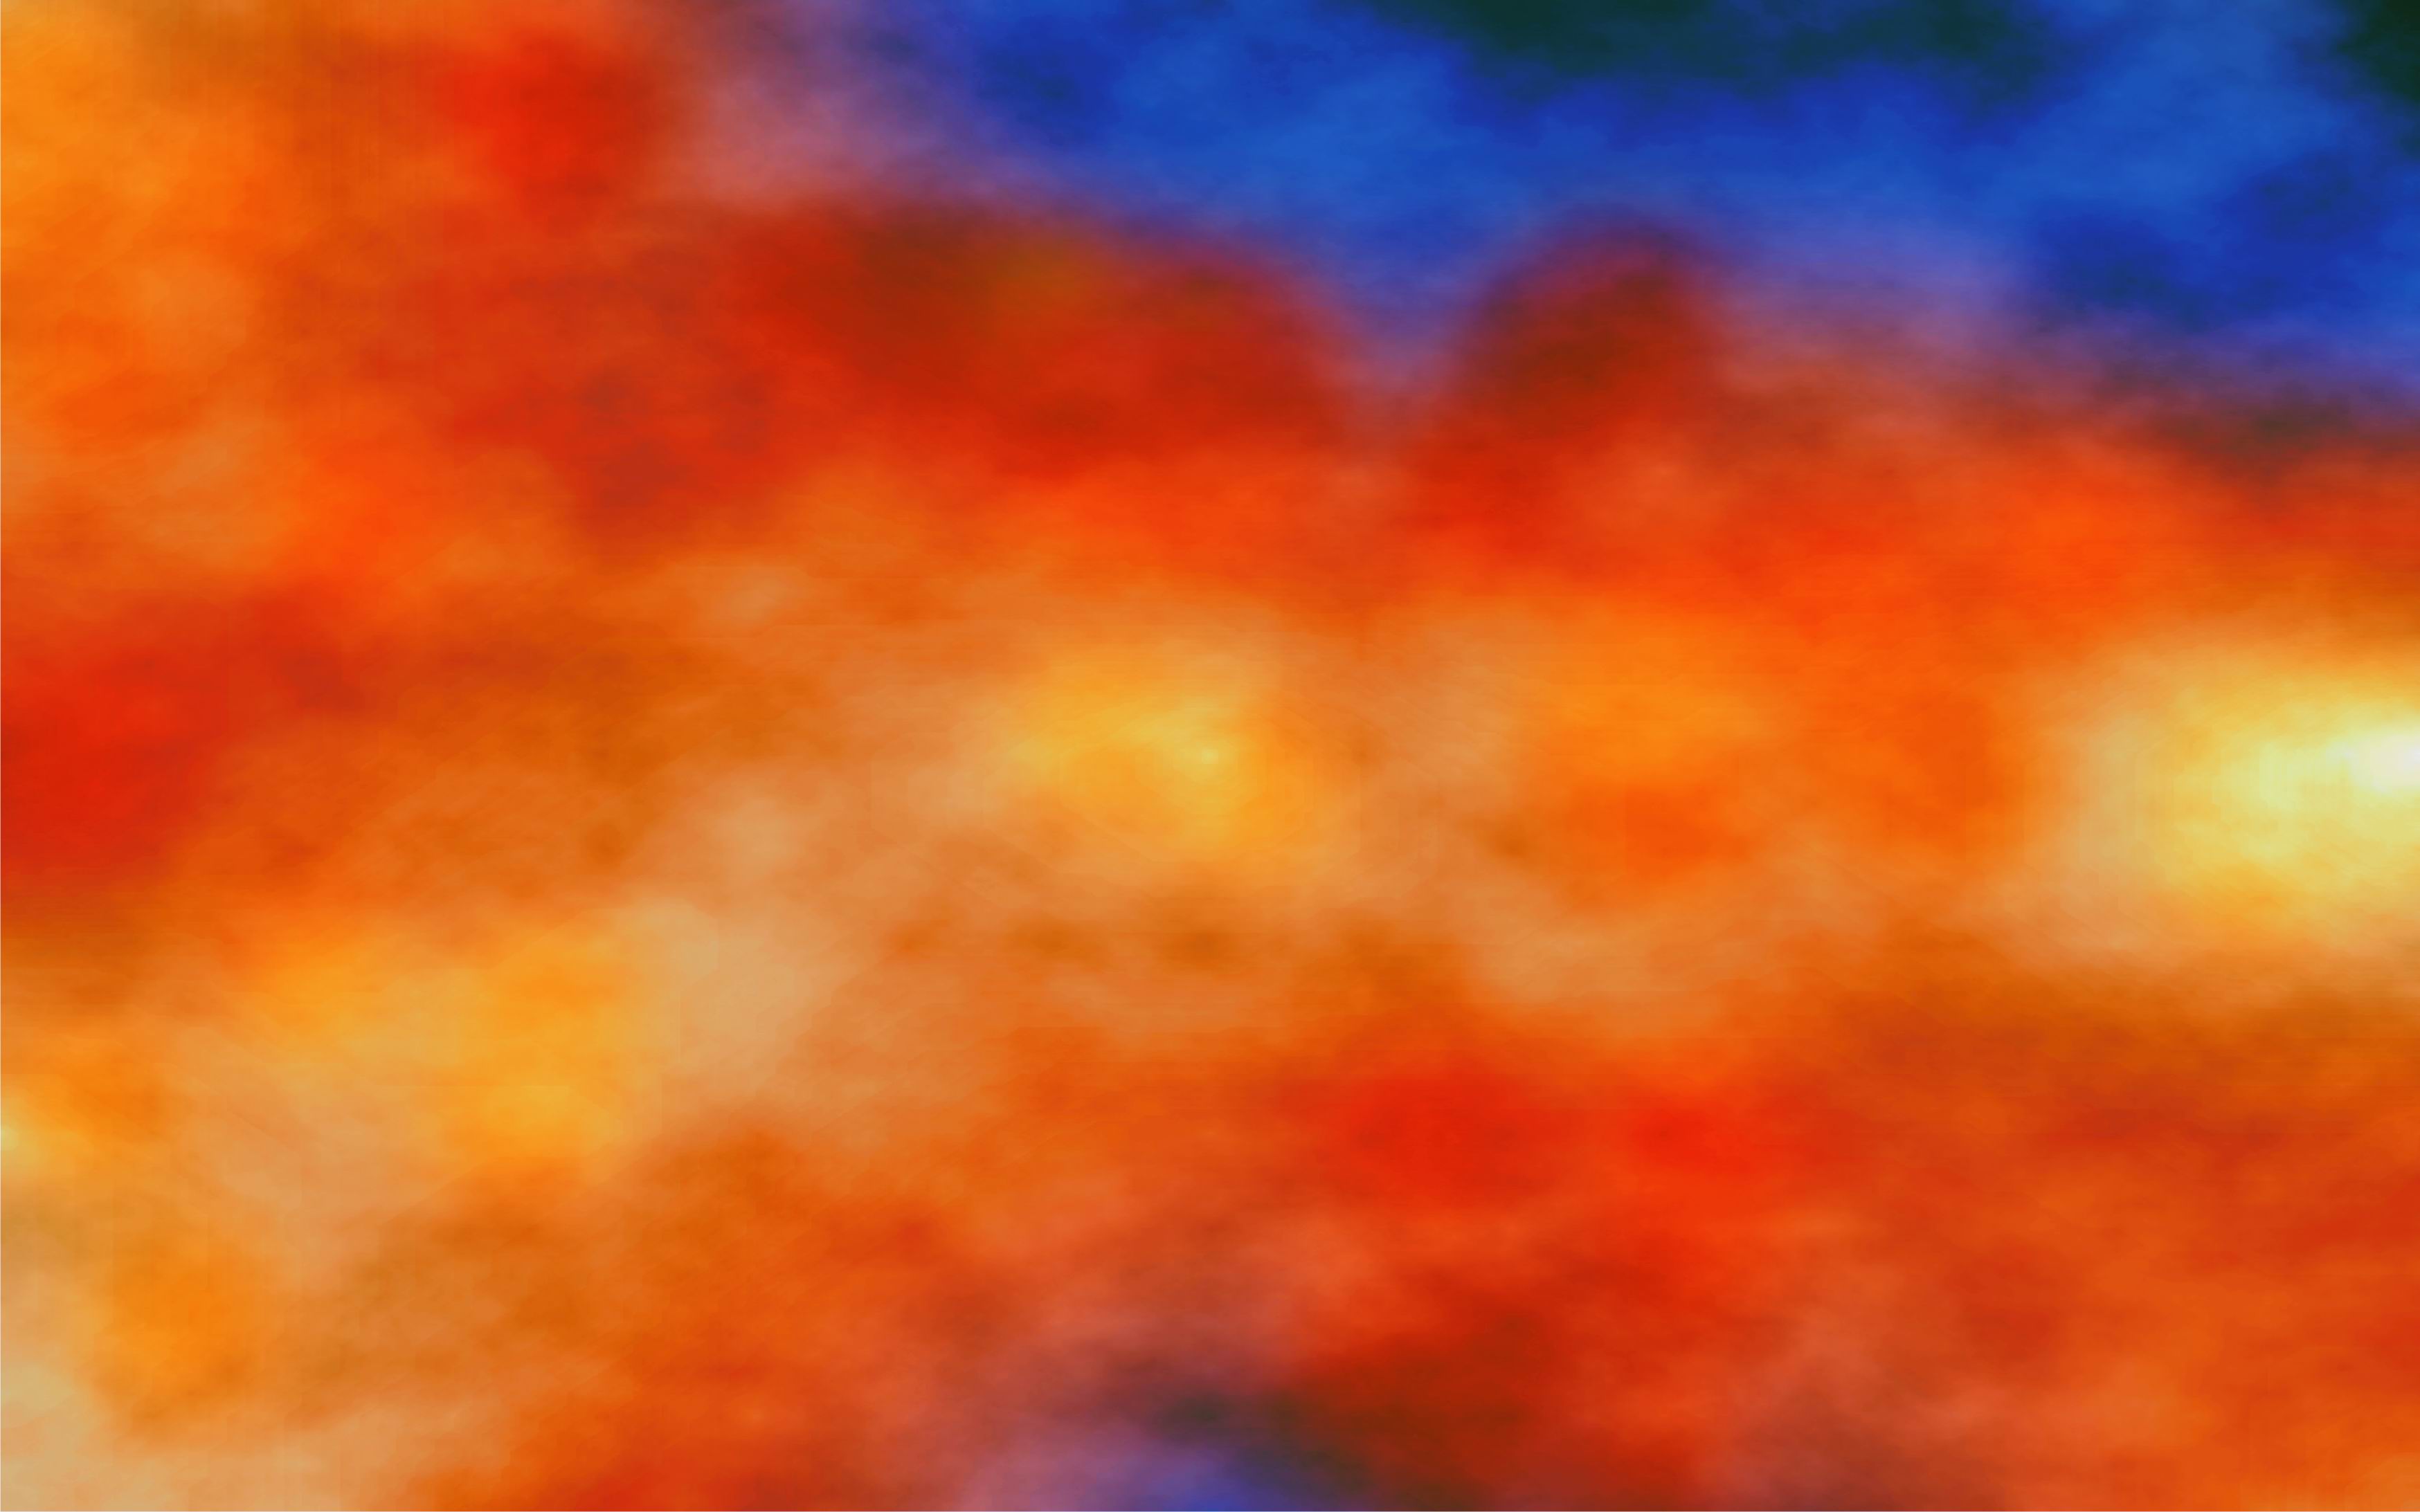 Blue And Orange Backgrounds Free | Pixelstalk.net